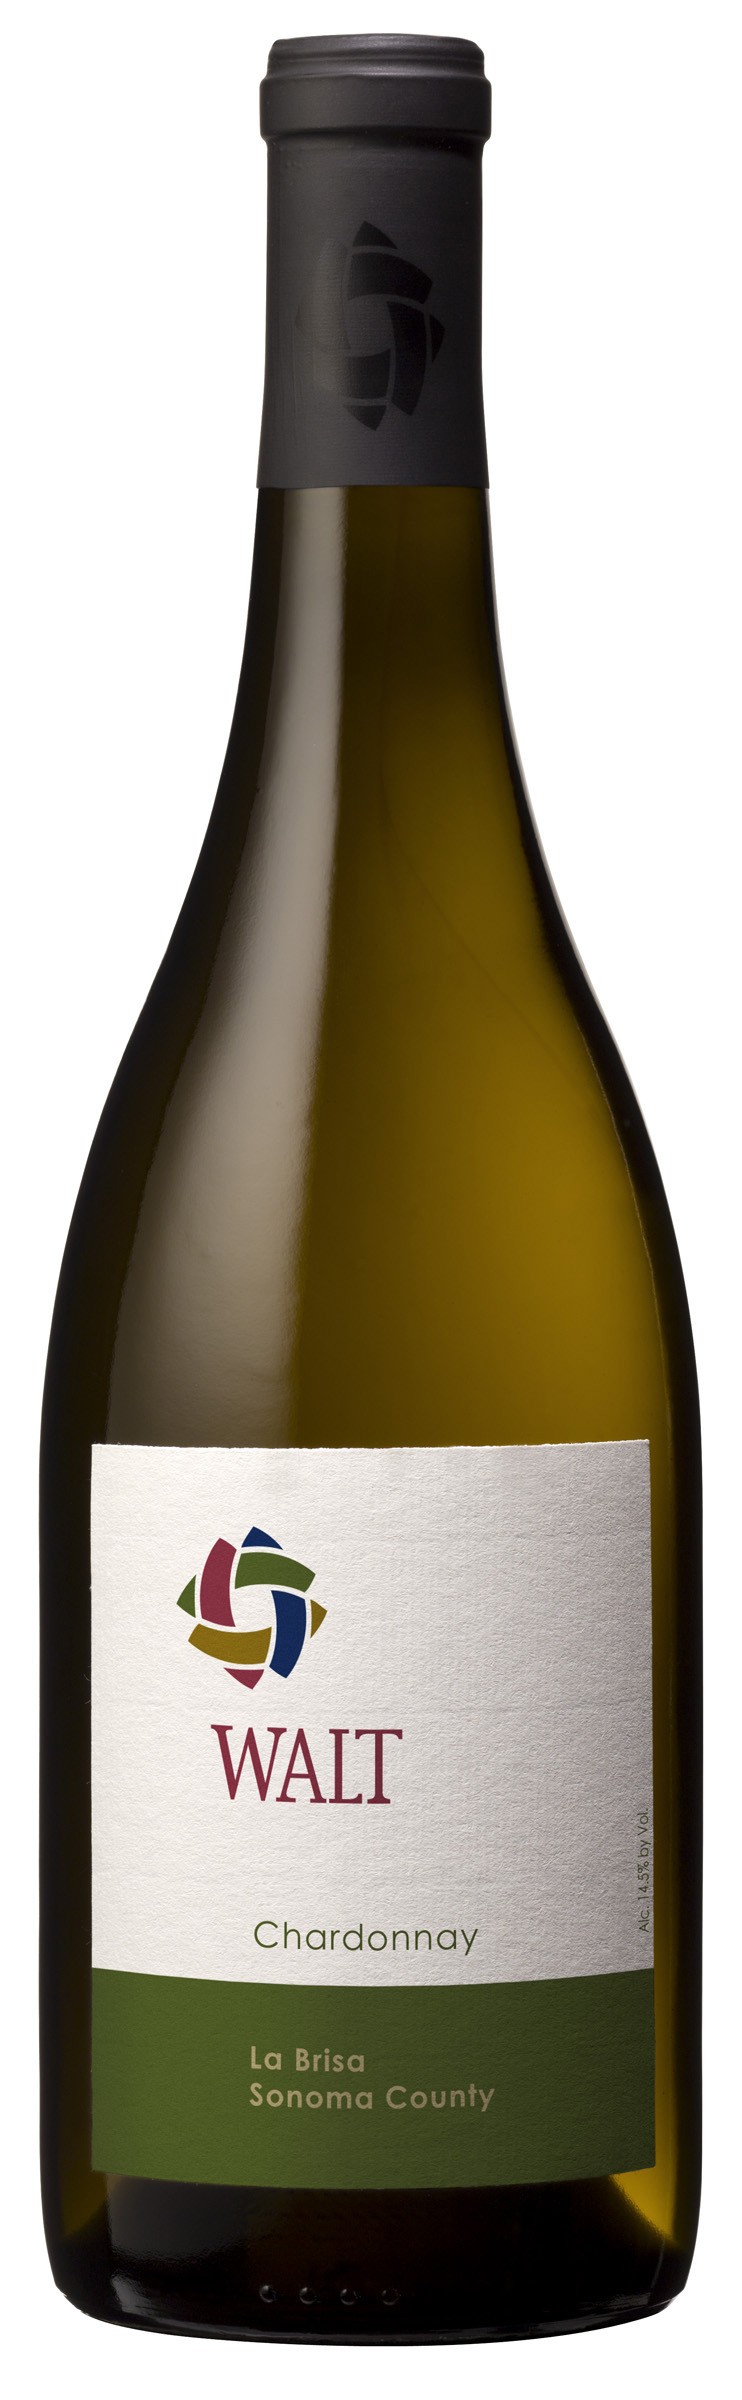 2016 WALT Chardonnay Sonoma - click image for full description